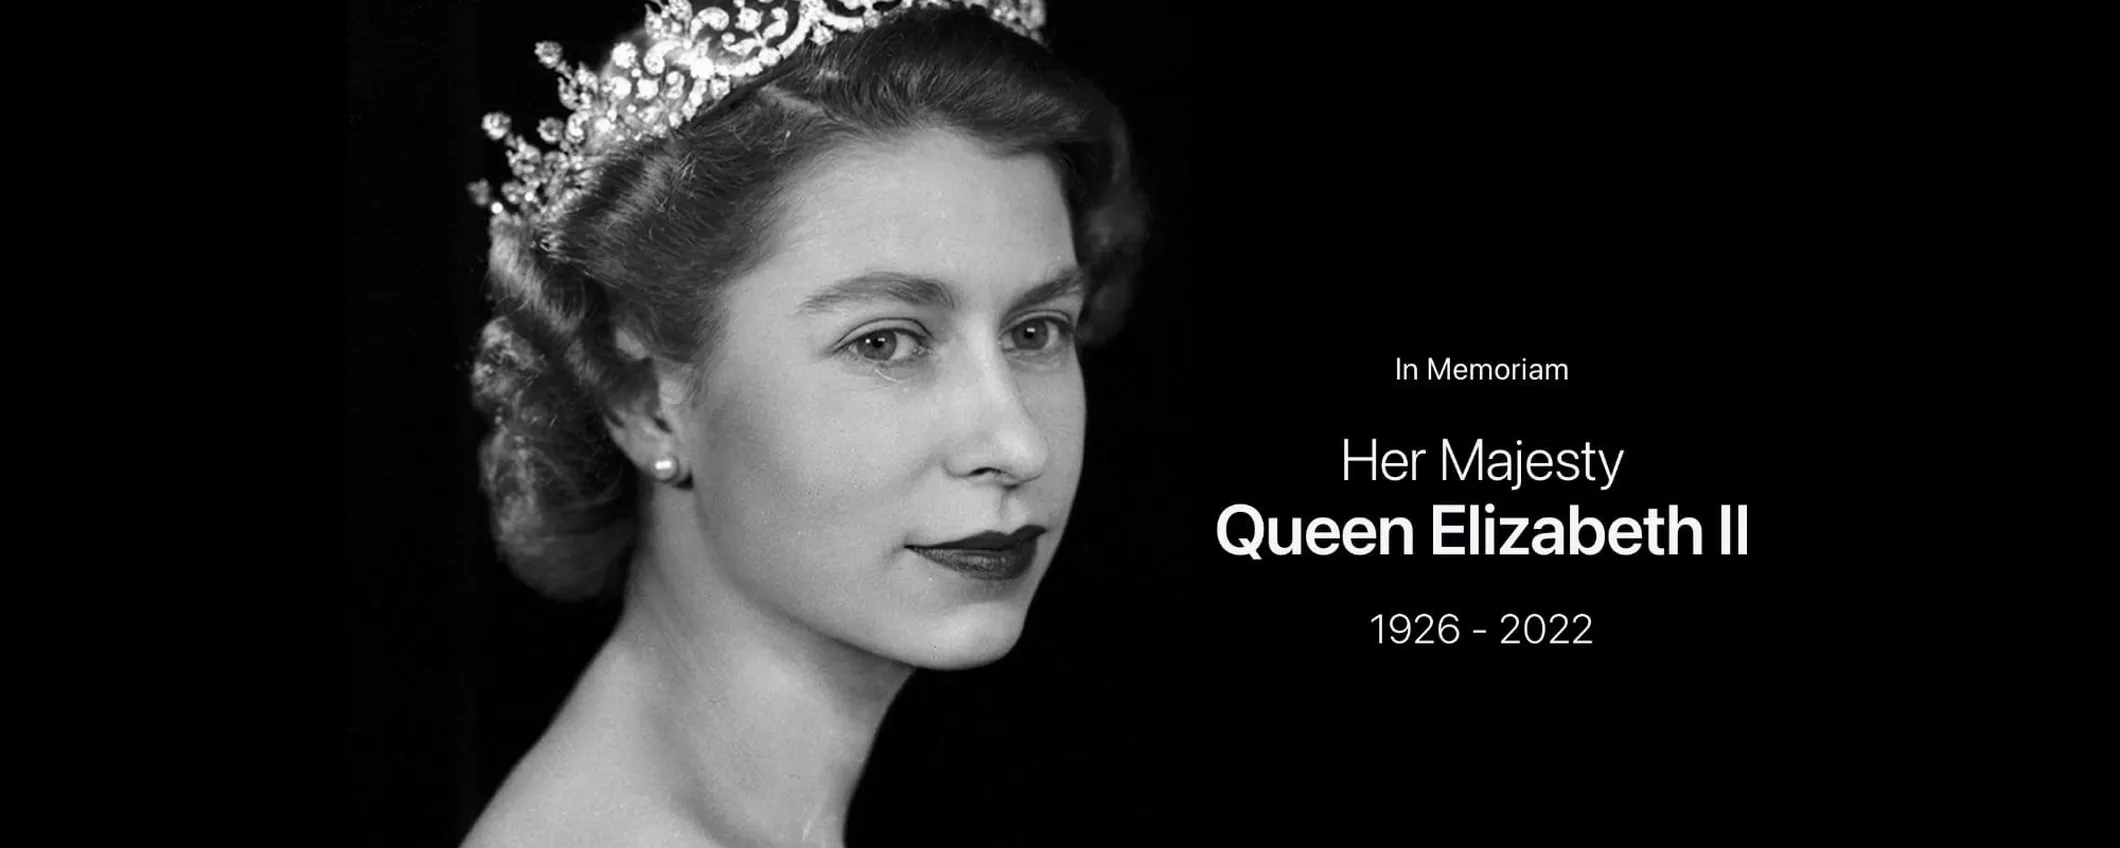 Morte Regina Elisabetta, Apple omaggia la sovrana